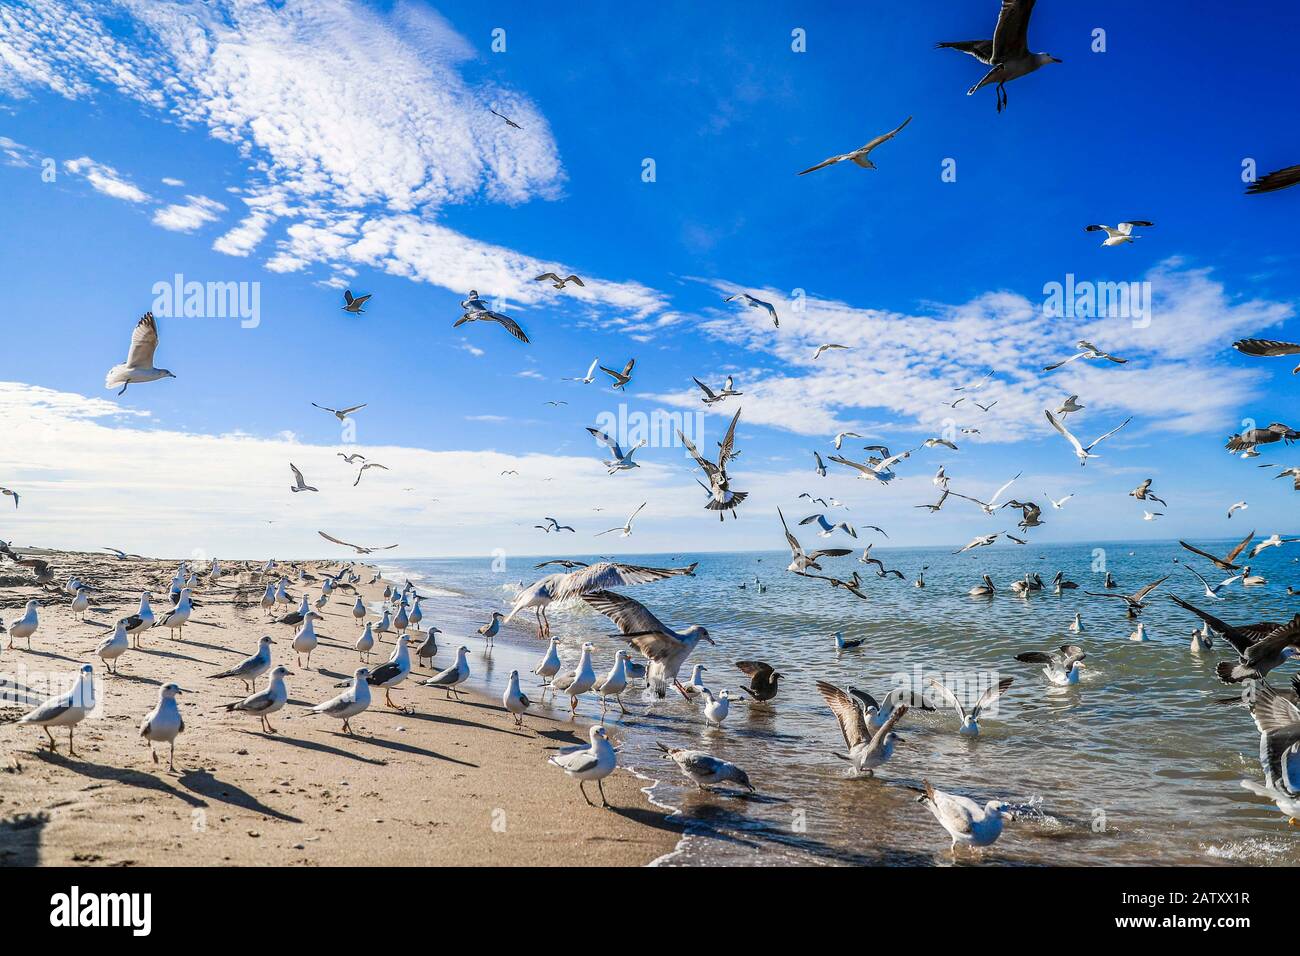 Seagulls in frenzy go ahead on fish remains on Sahuimaro beach, Sonora, Mexico ...   sea, beach shore, shoreline, marine life, feeding, eating, frenzy, wild, survival, bird, seagull, daylight, beautiful, sky, green, sea water, life, sea of cortez, gulf of california, Disproportionate impetus or violence, Violent exaltation of mood, especially of a disproportionate passion. Violence or impetus   Gaviotas en frenesí se avalanzan sobre restos de pescados en  playa Sahuimaro, Sonora, Mexico...  maritima, orilla de la playa, litoral, vida marina, alimentandose, comiendo, frenesí , salvaje, superviv Stock Photo